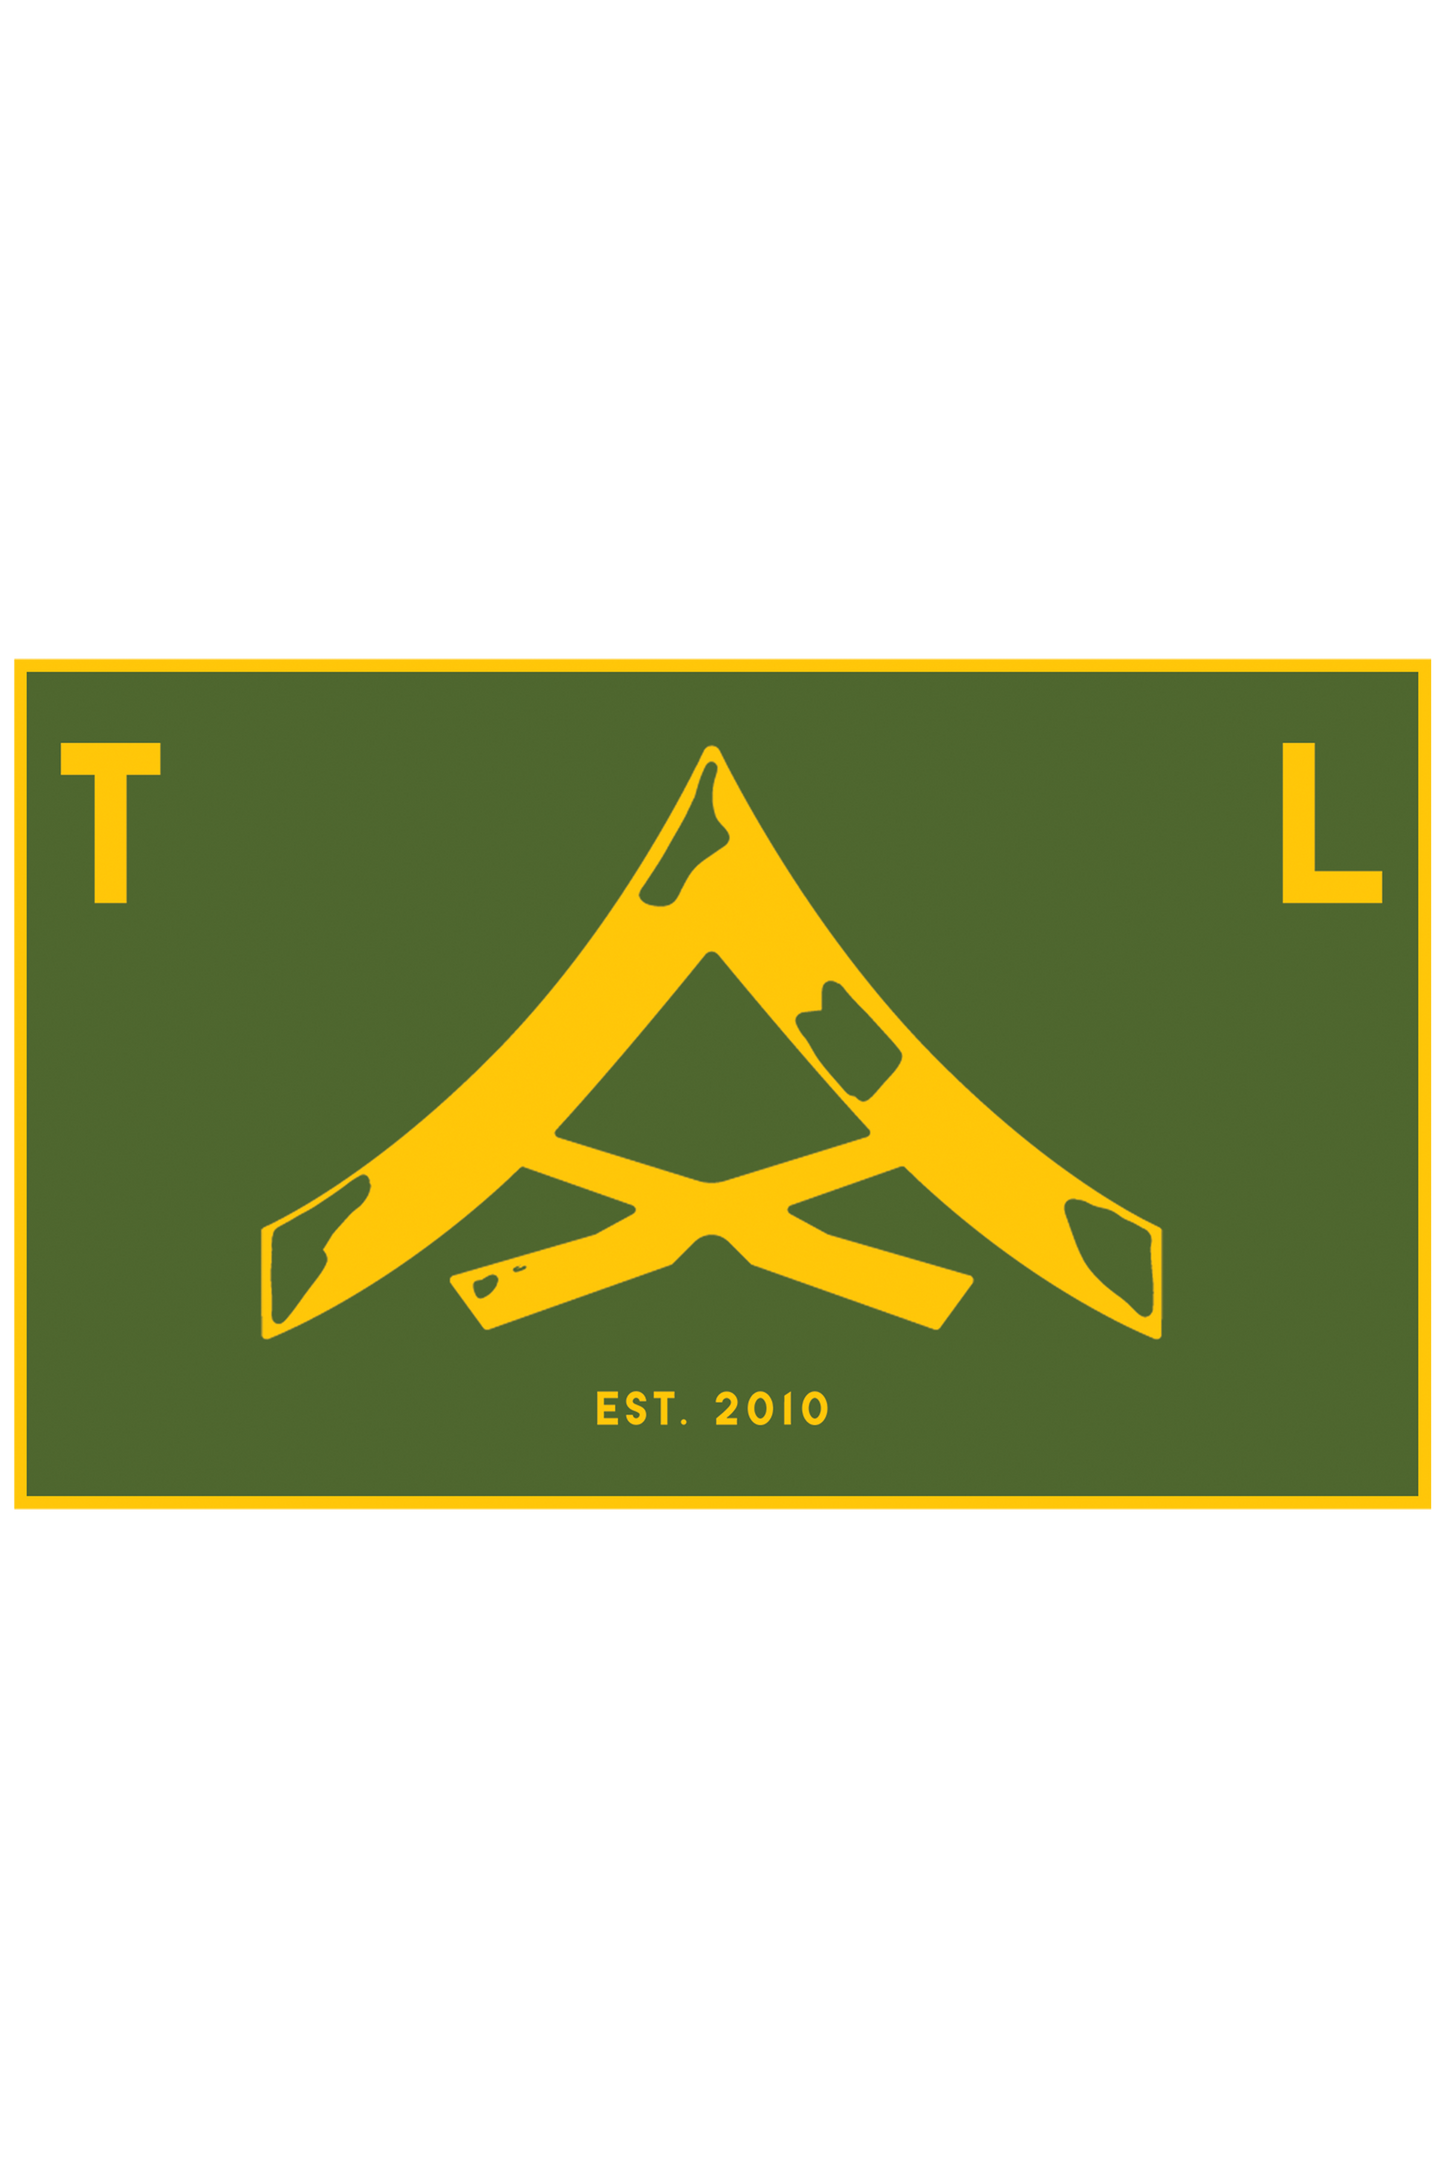 Terminal Lance Rank Logo Sticker